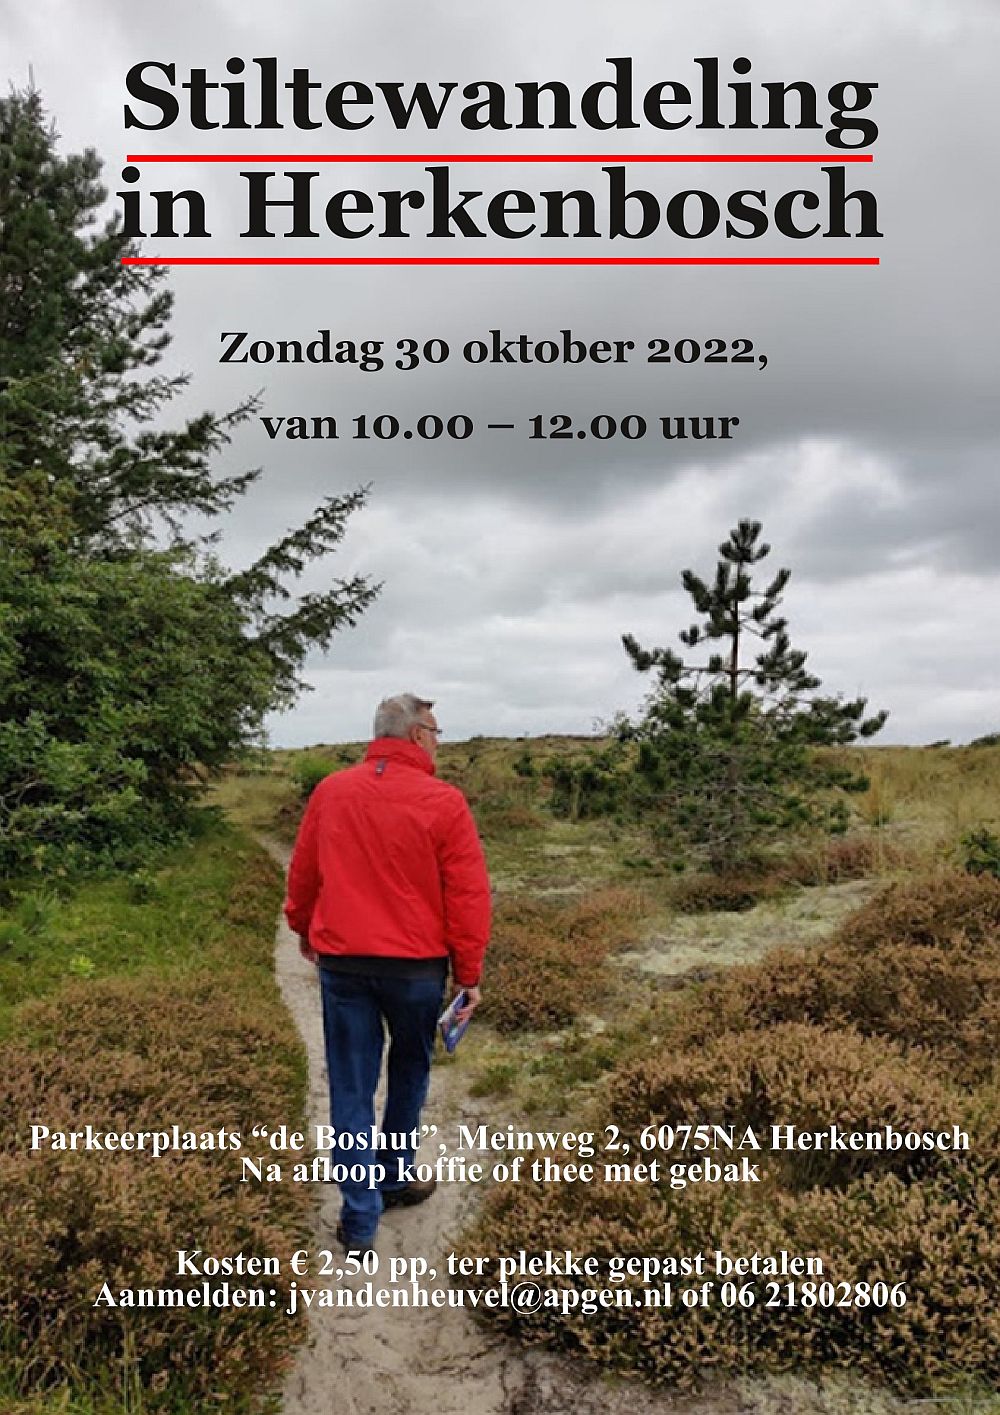 10:00 – 12:00 Stiltewandeling – Herkenbosch